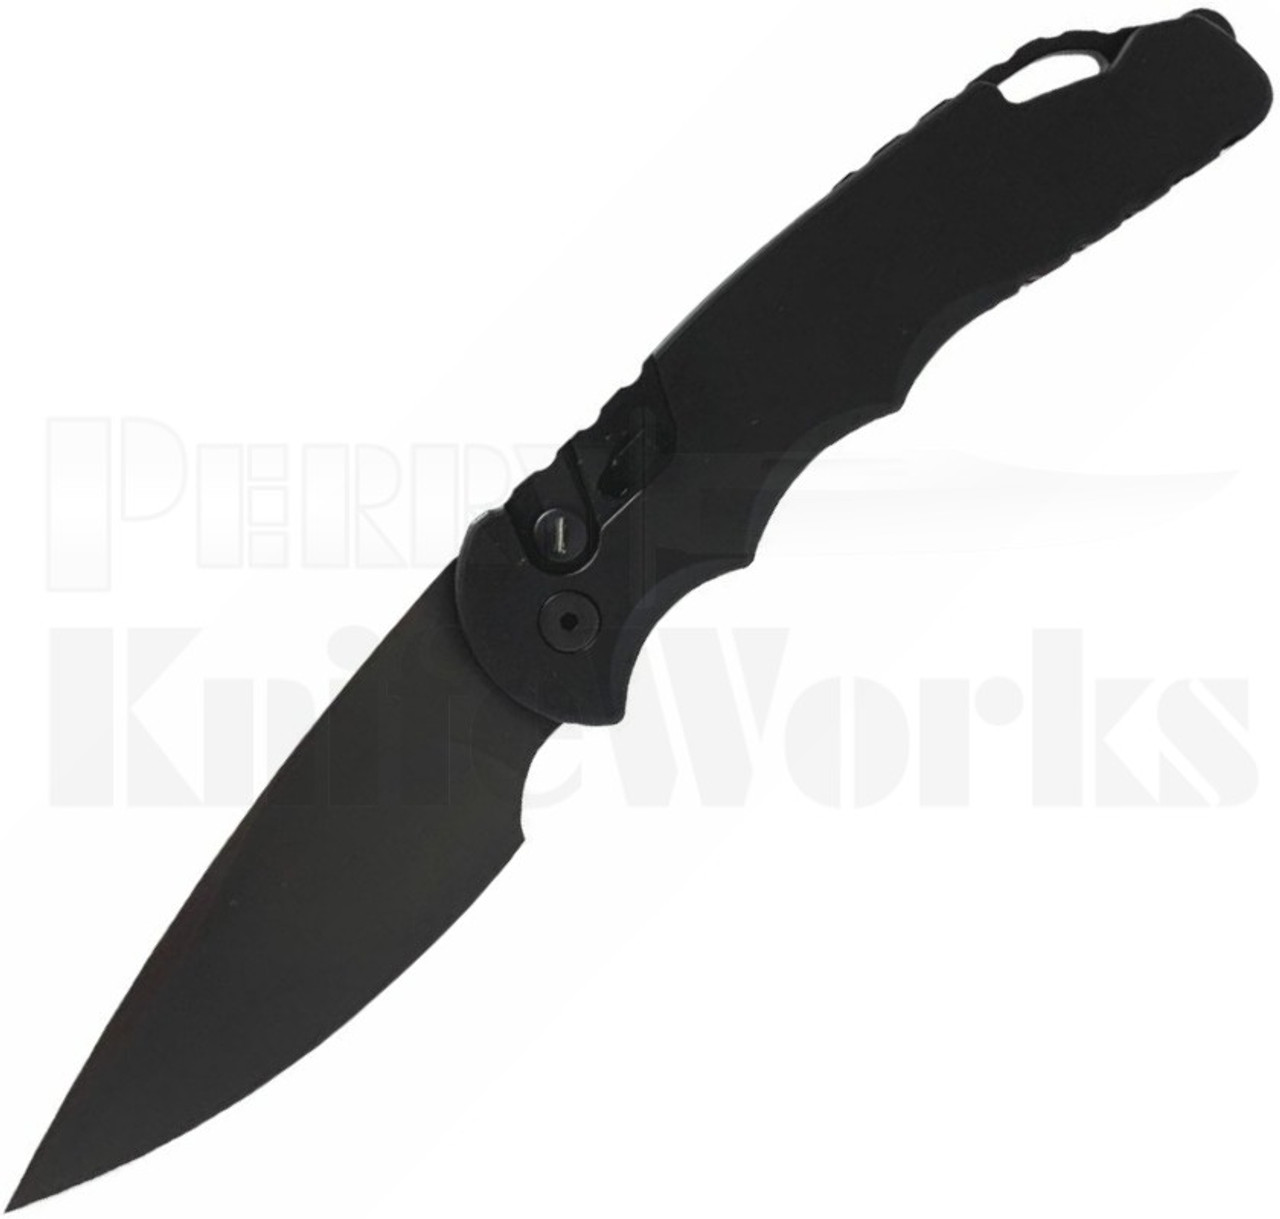 Pro-Tech TR-4 Operator Automatic Knife Black l **Tritium Vial** l For Sale